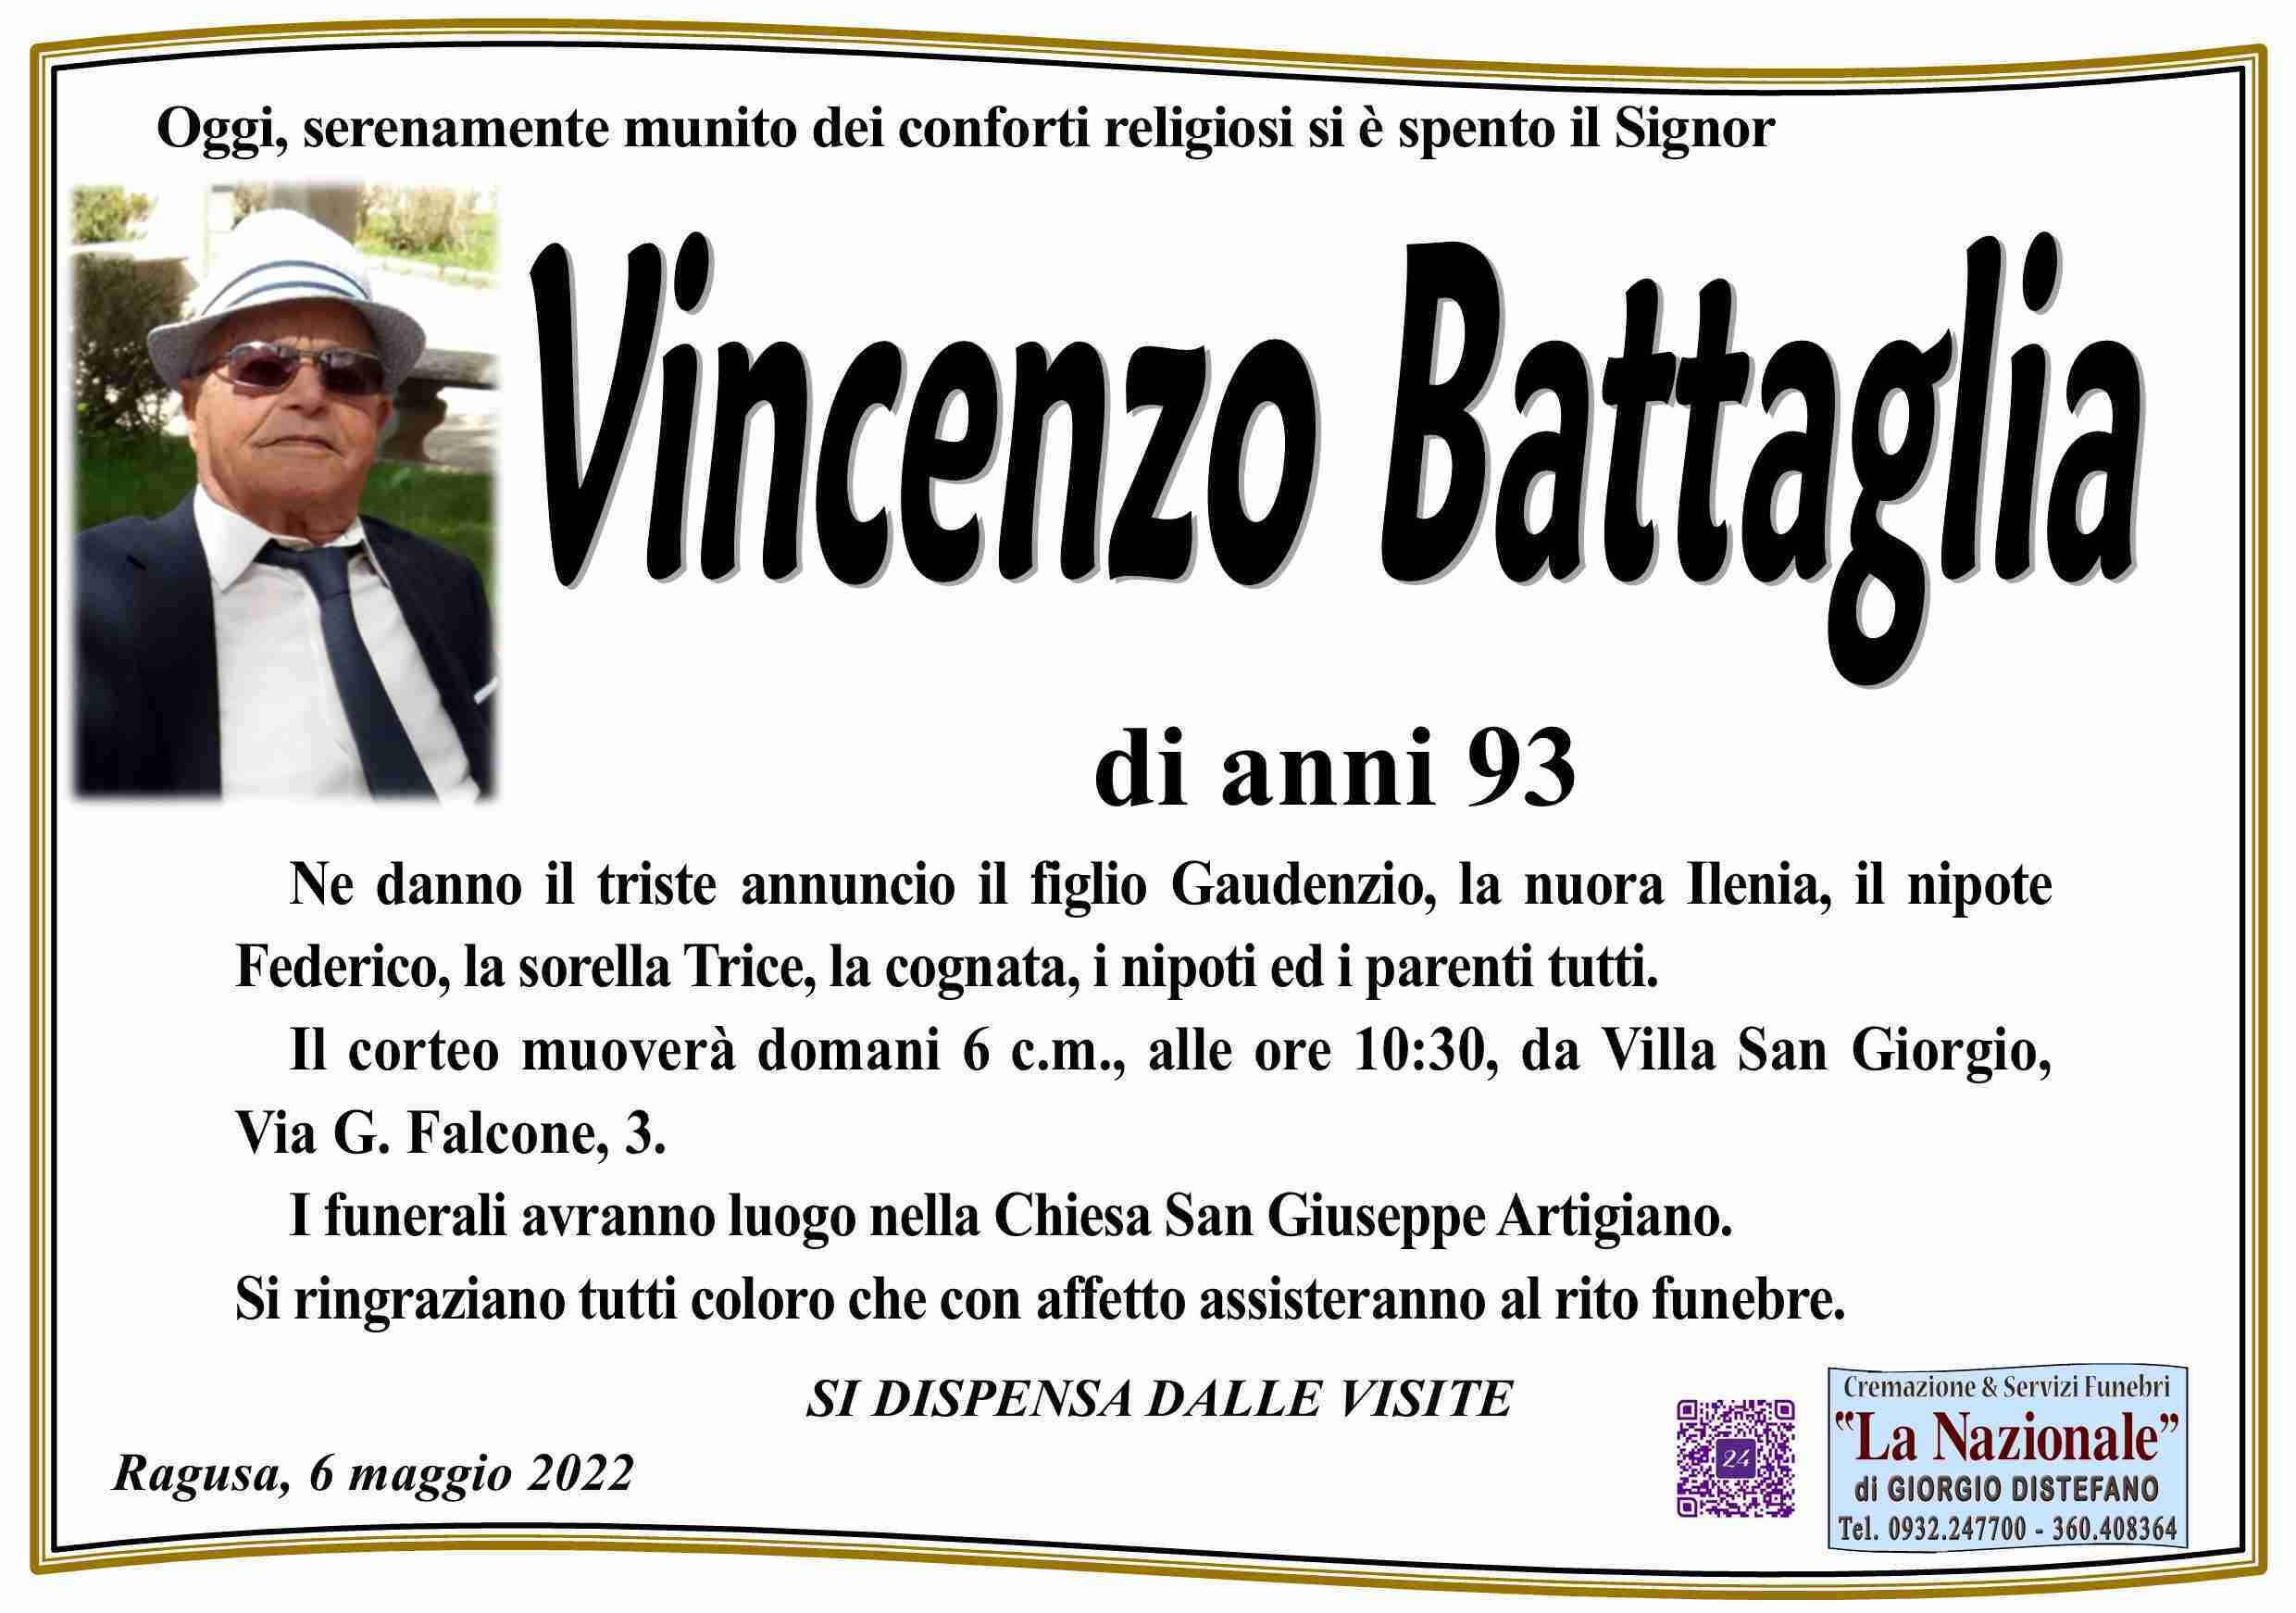 Vincenzo Battaglia